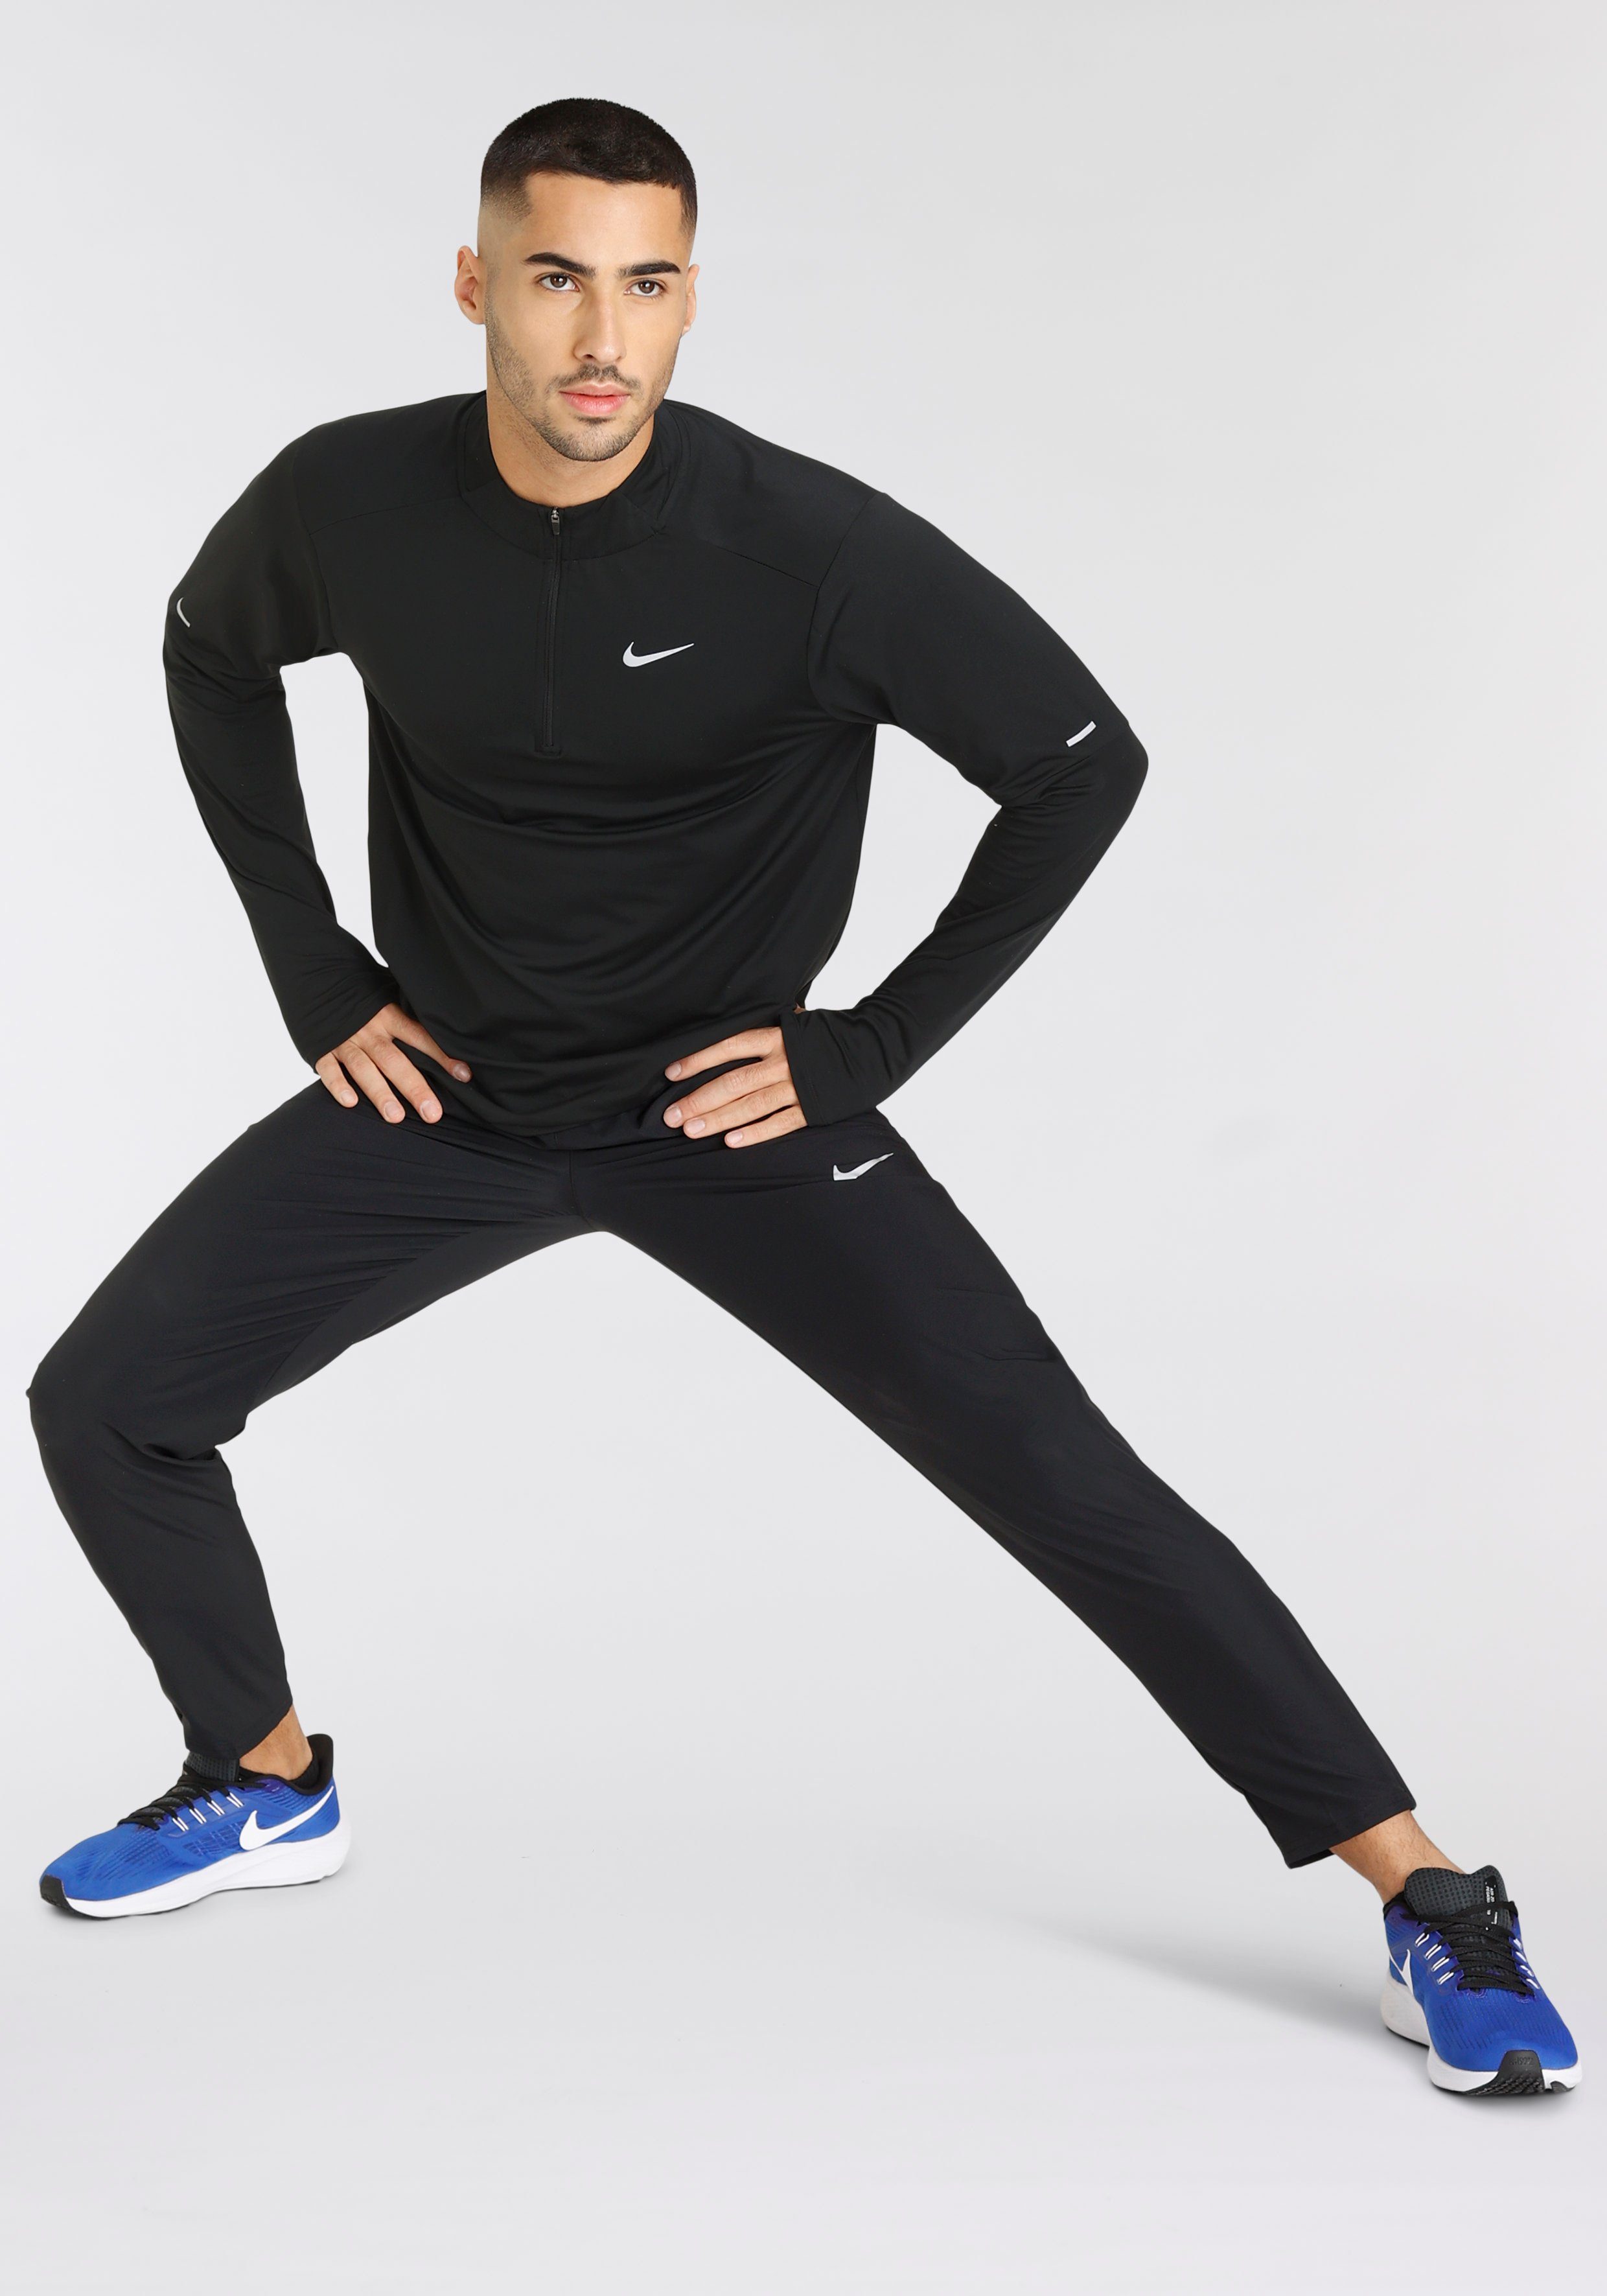 schwarz Laufshirt Nike Dri-FIT Running 1/-Zip Men's Top Element